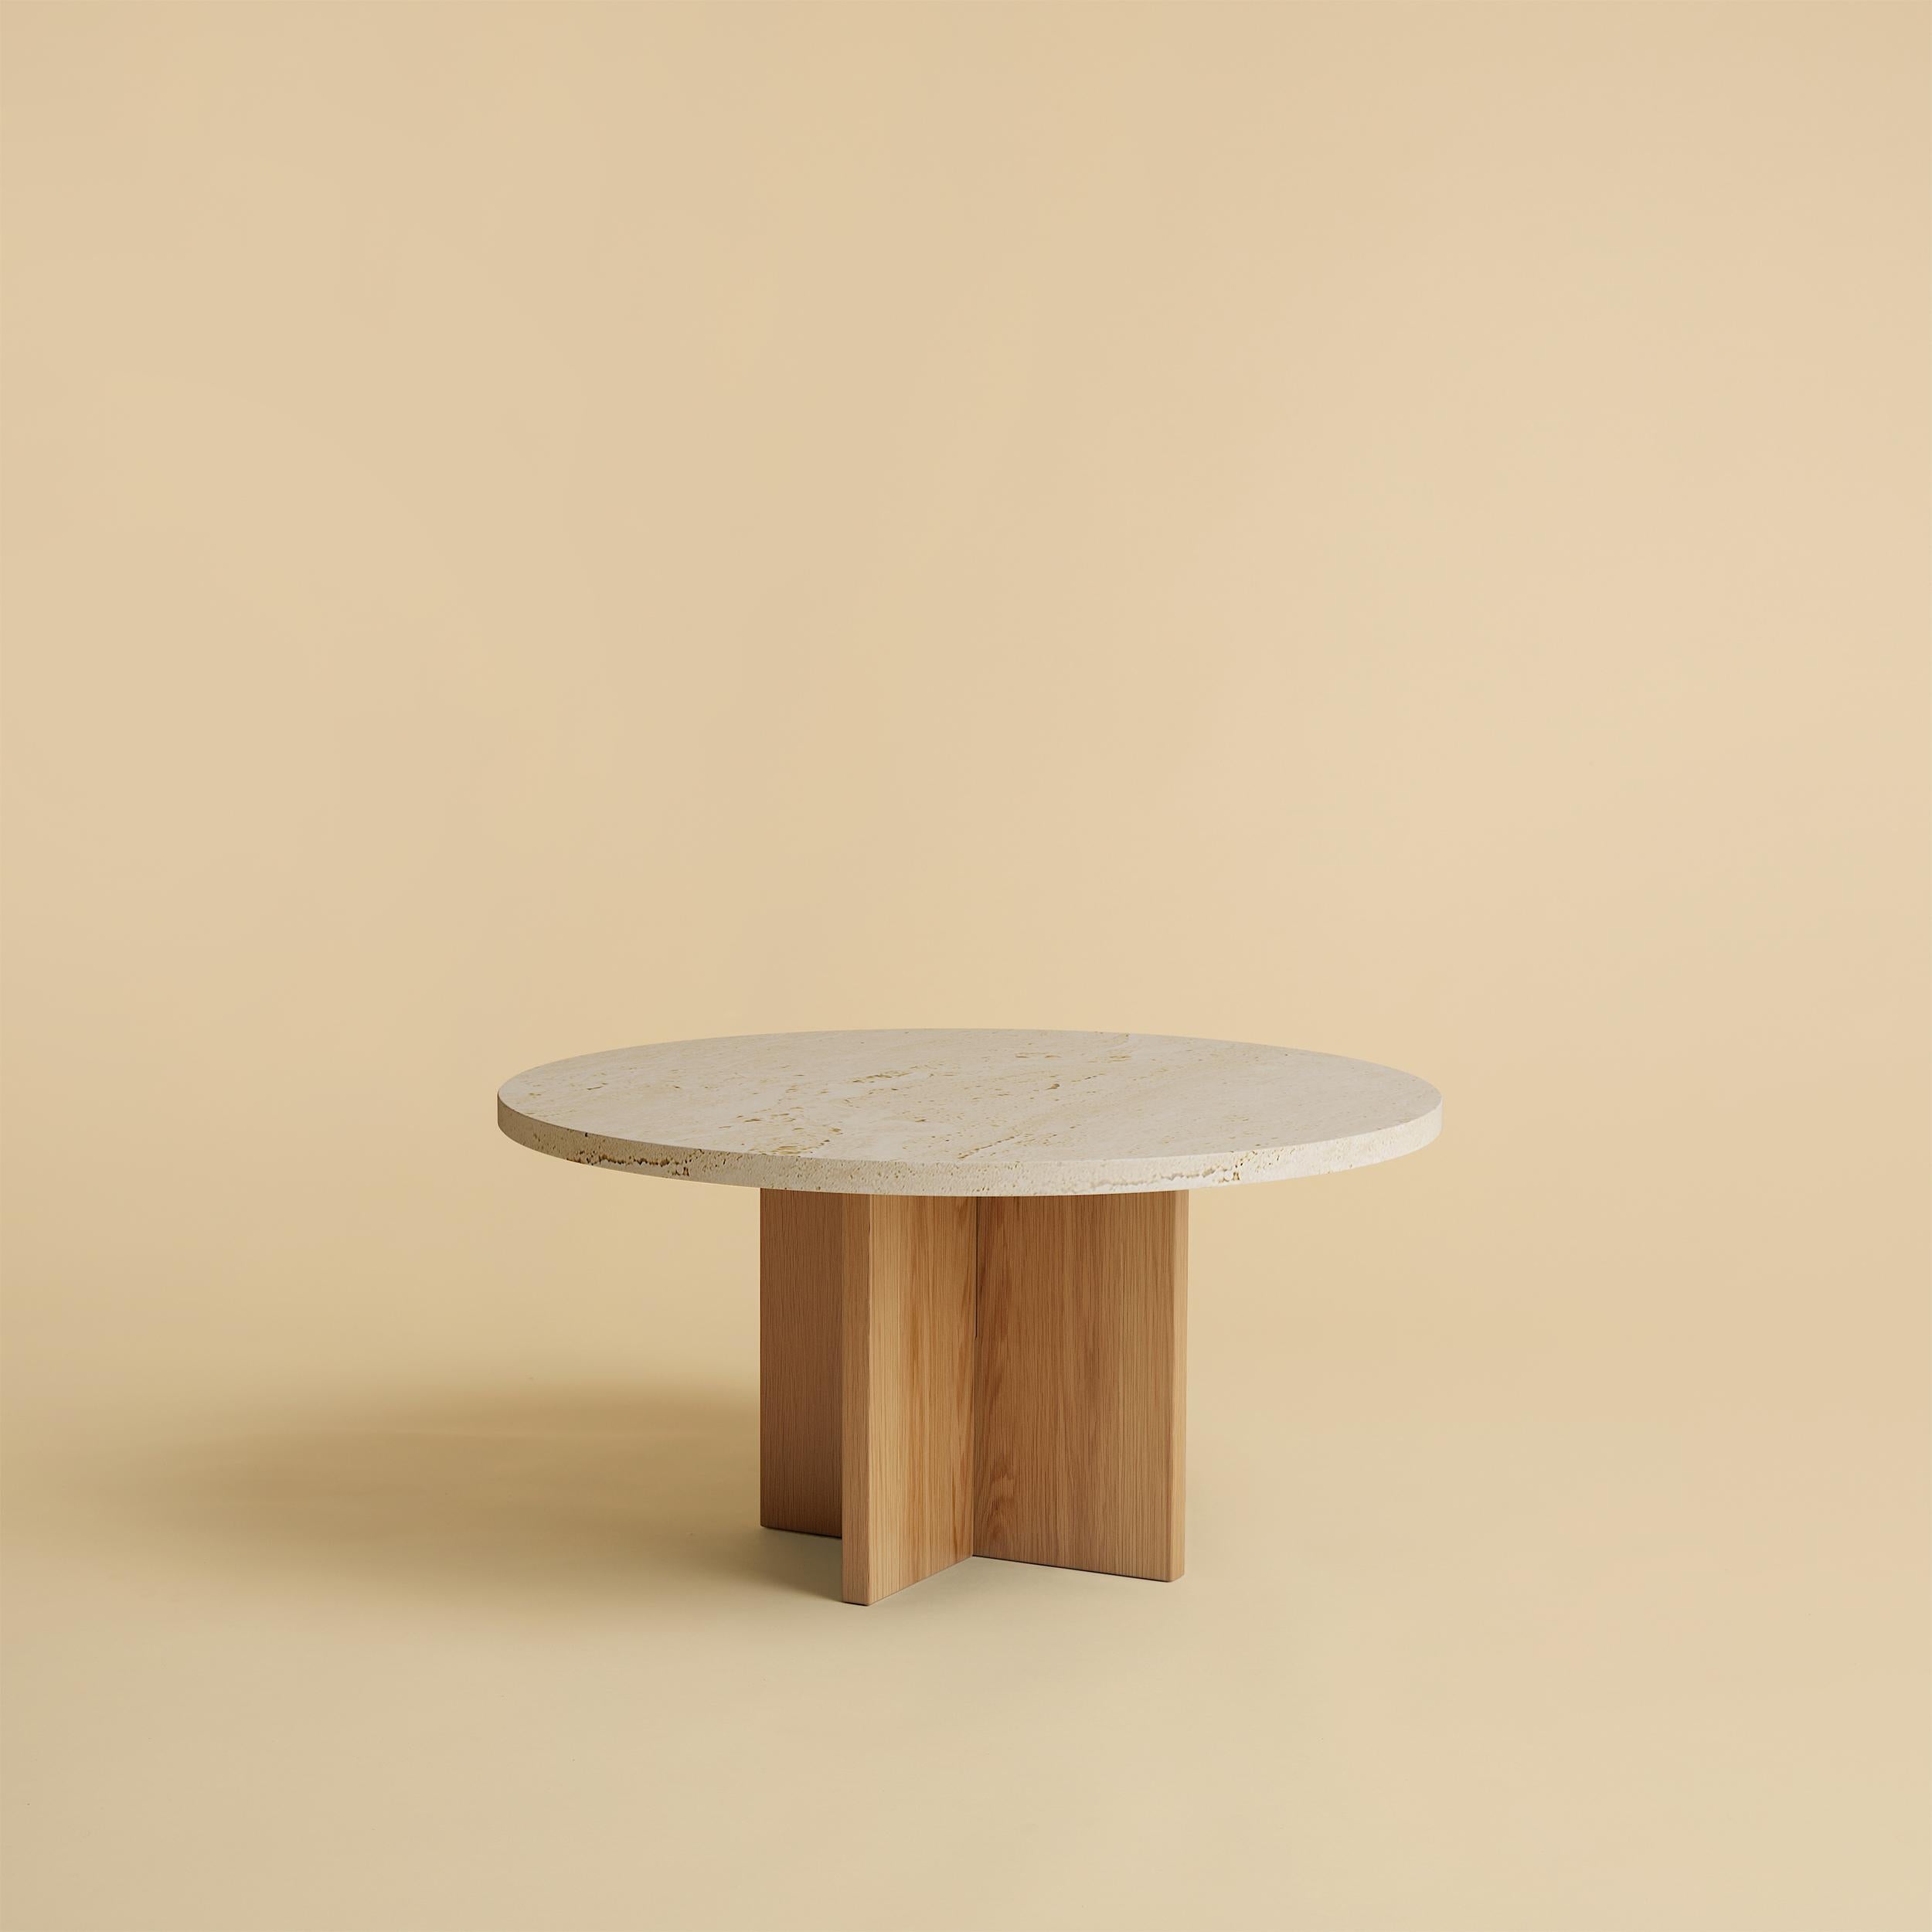 Moderne Table basse ronde en marbre travertin romain, fabriquée en Italie en vente